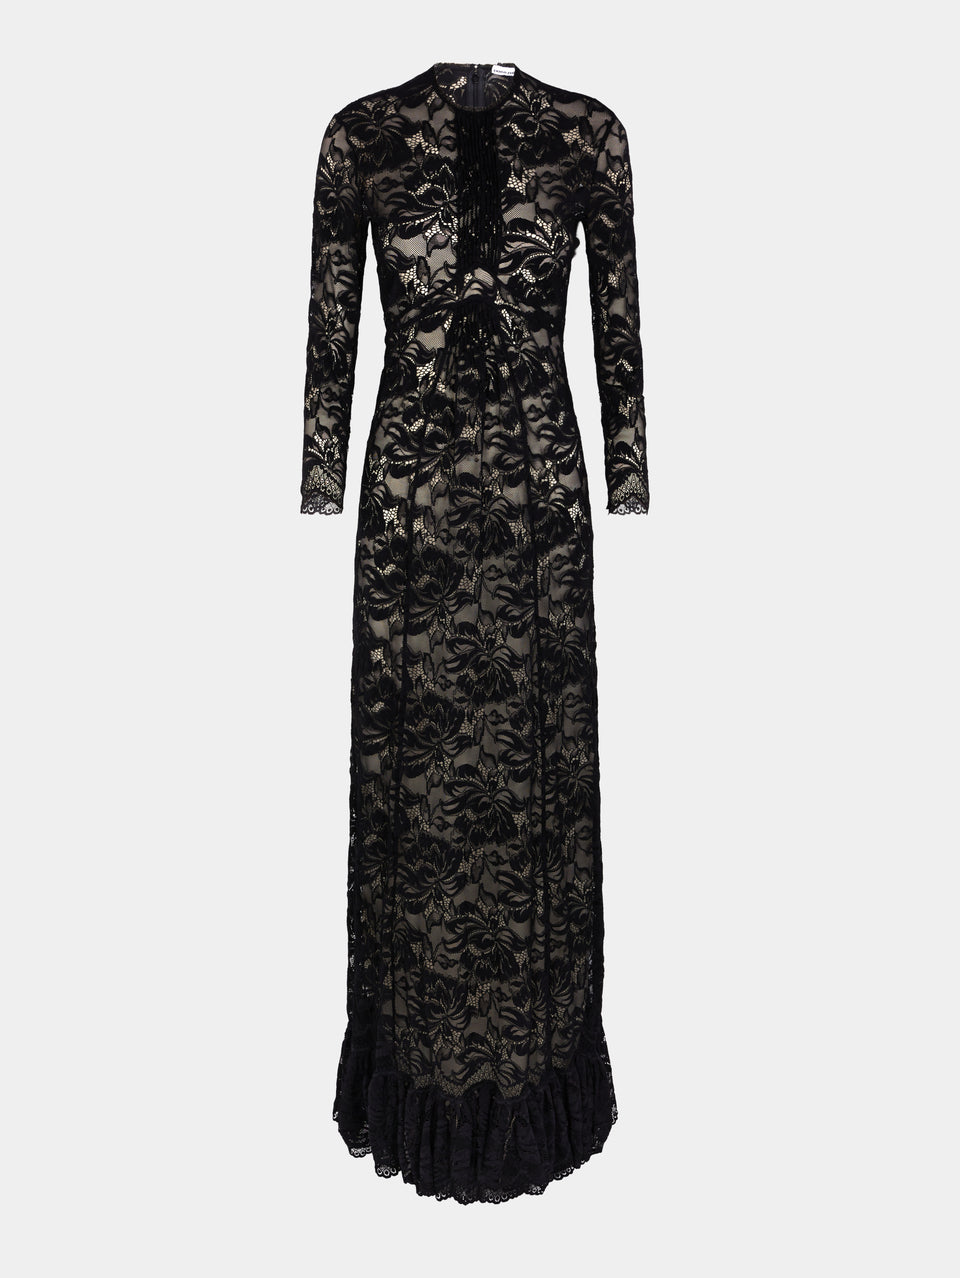 Long black lace dress